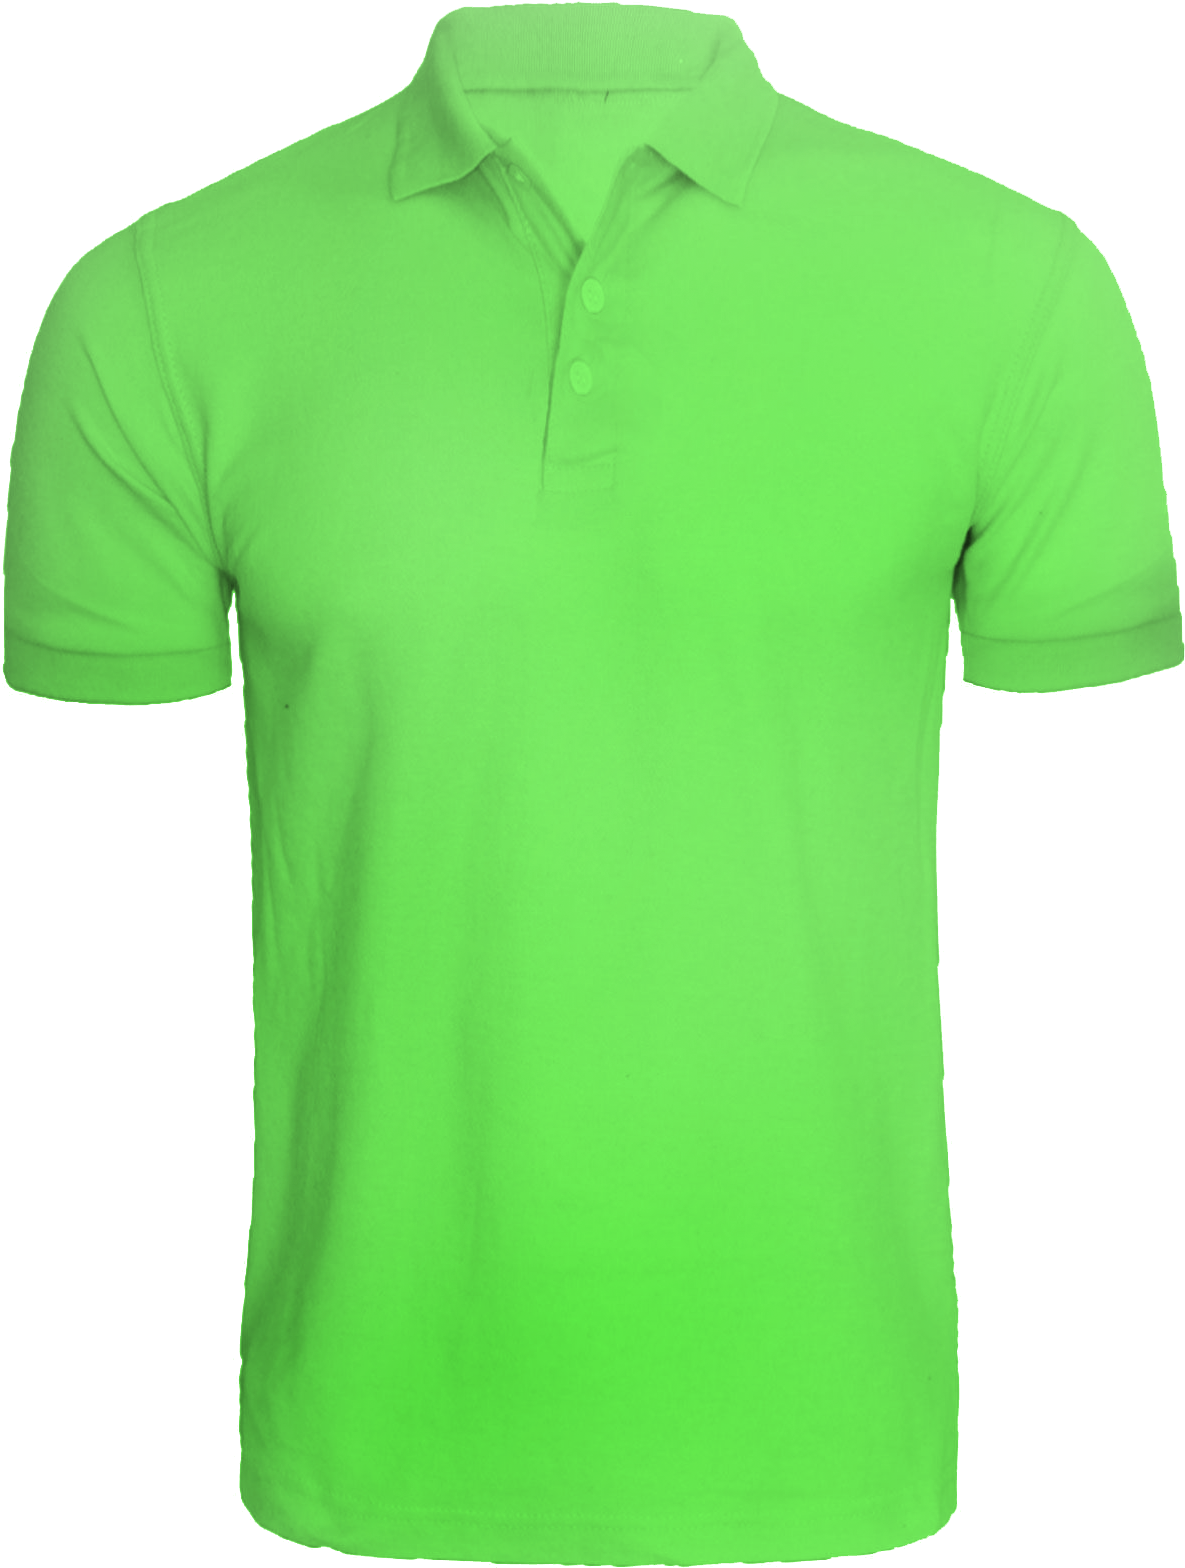 Neon Green Polo Shirt PNG